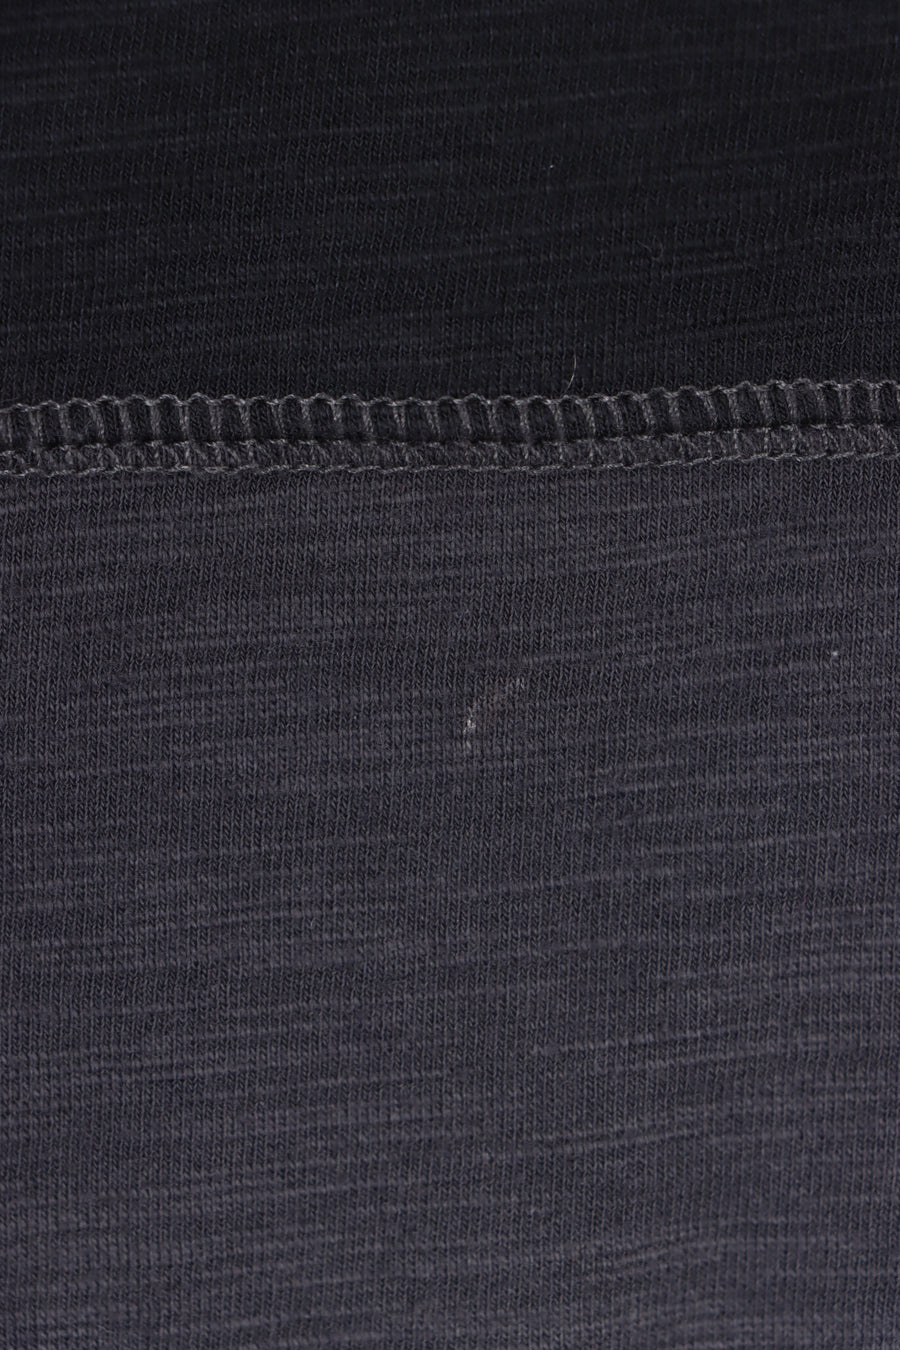 HARLEY DAVIDSON Colour Block Contrast Stitch Crop Top (Women's M)